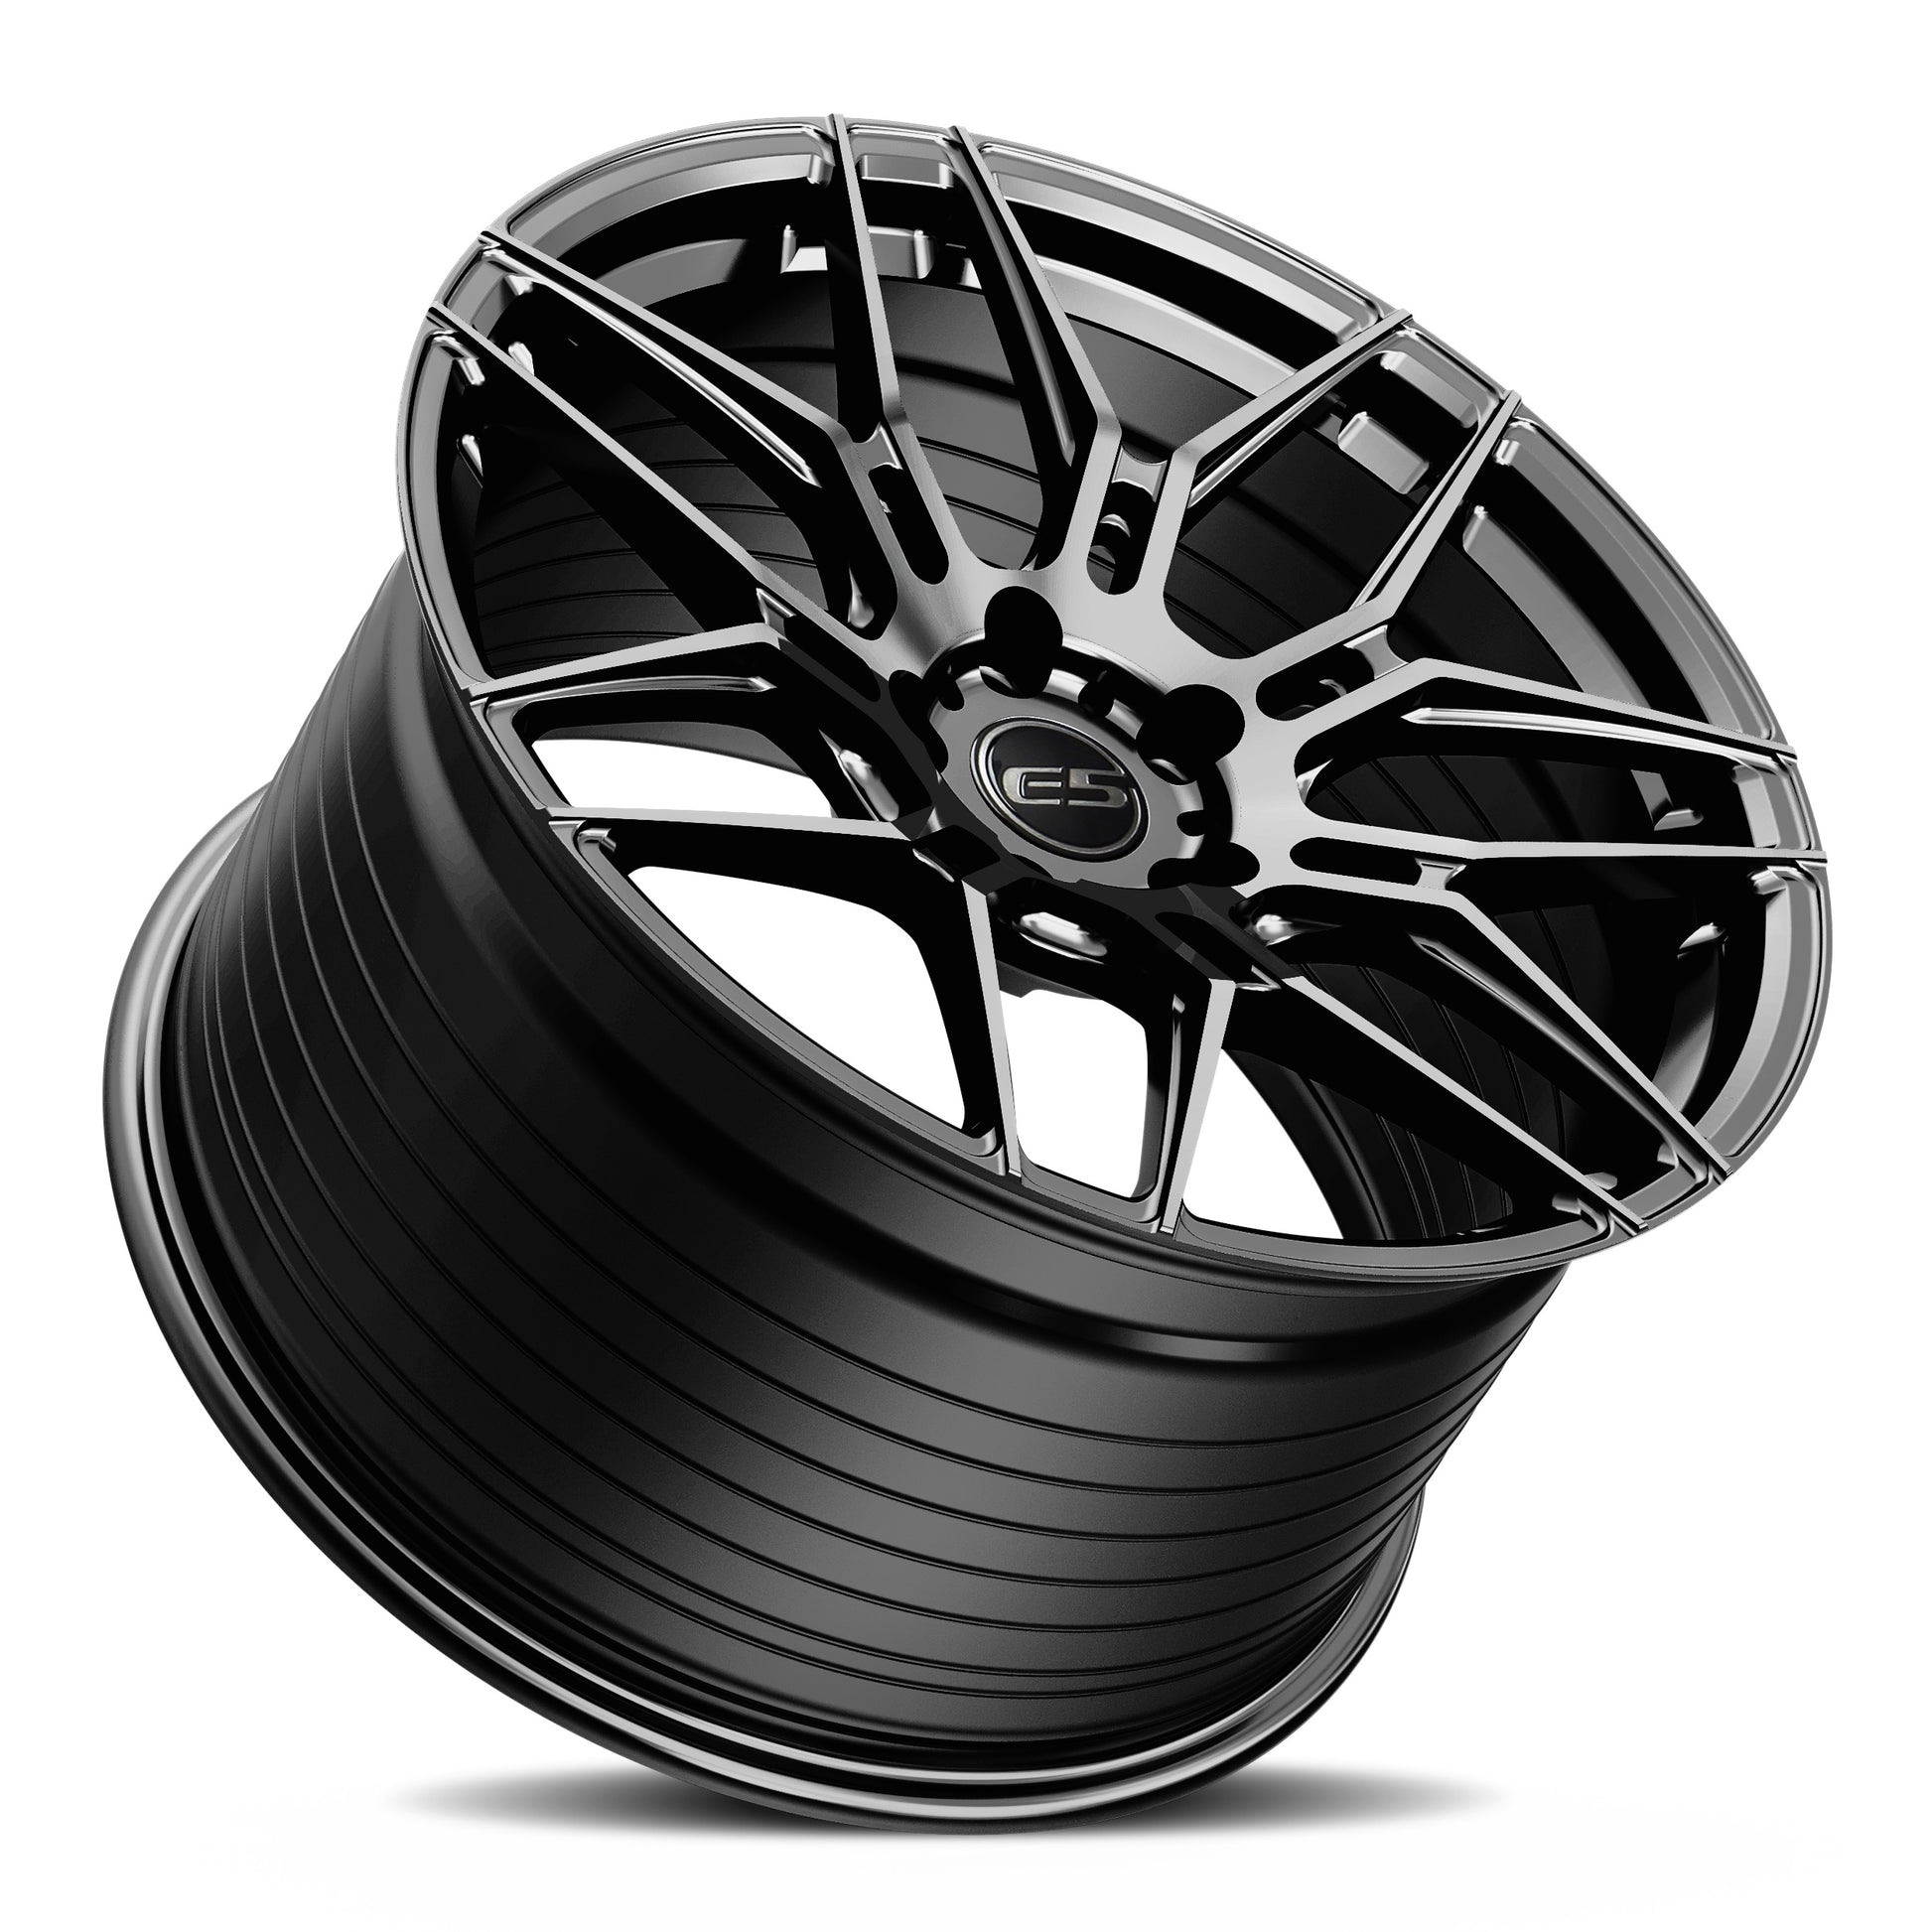 C8 Corvette E5 Speedway Wheel - Gloss Black (concave)